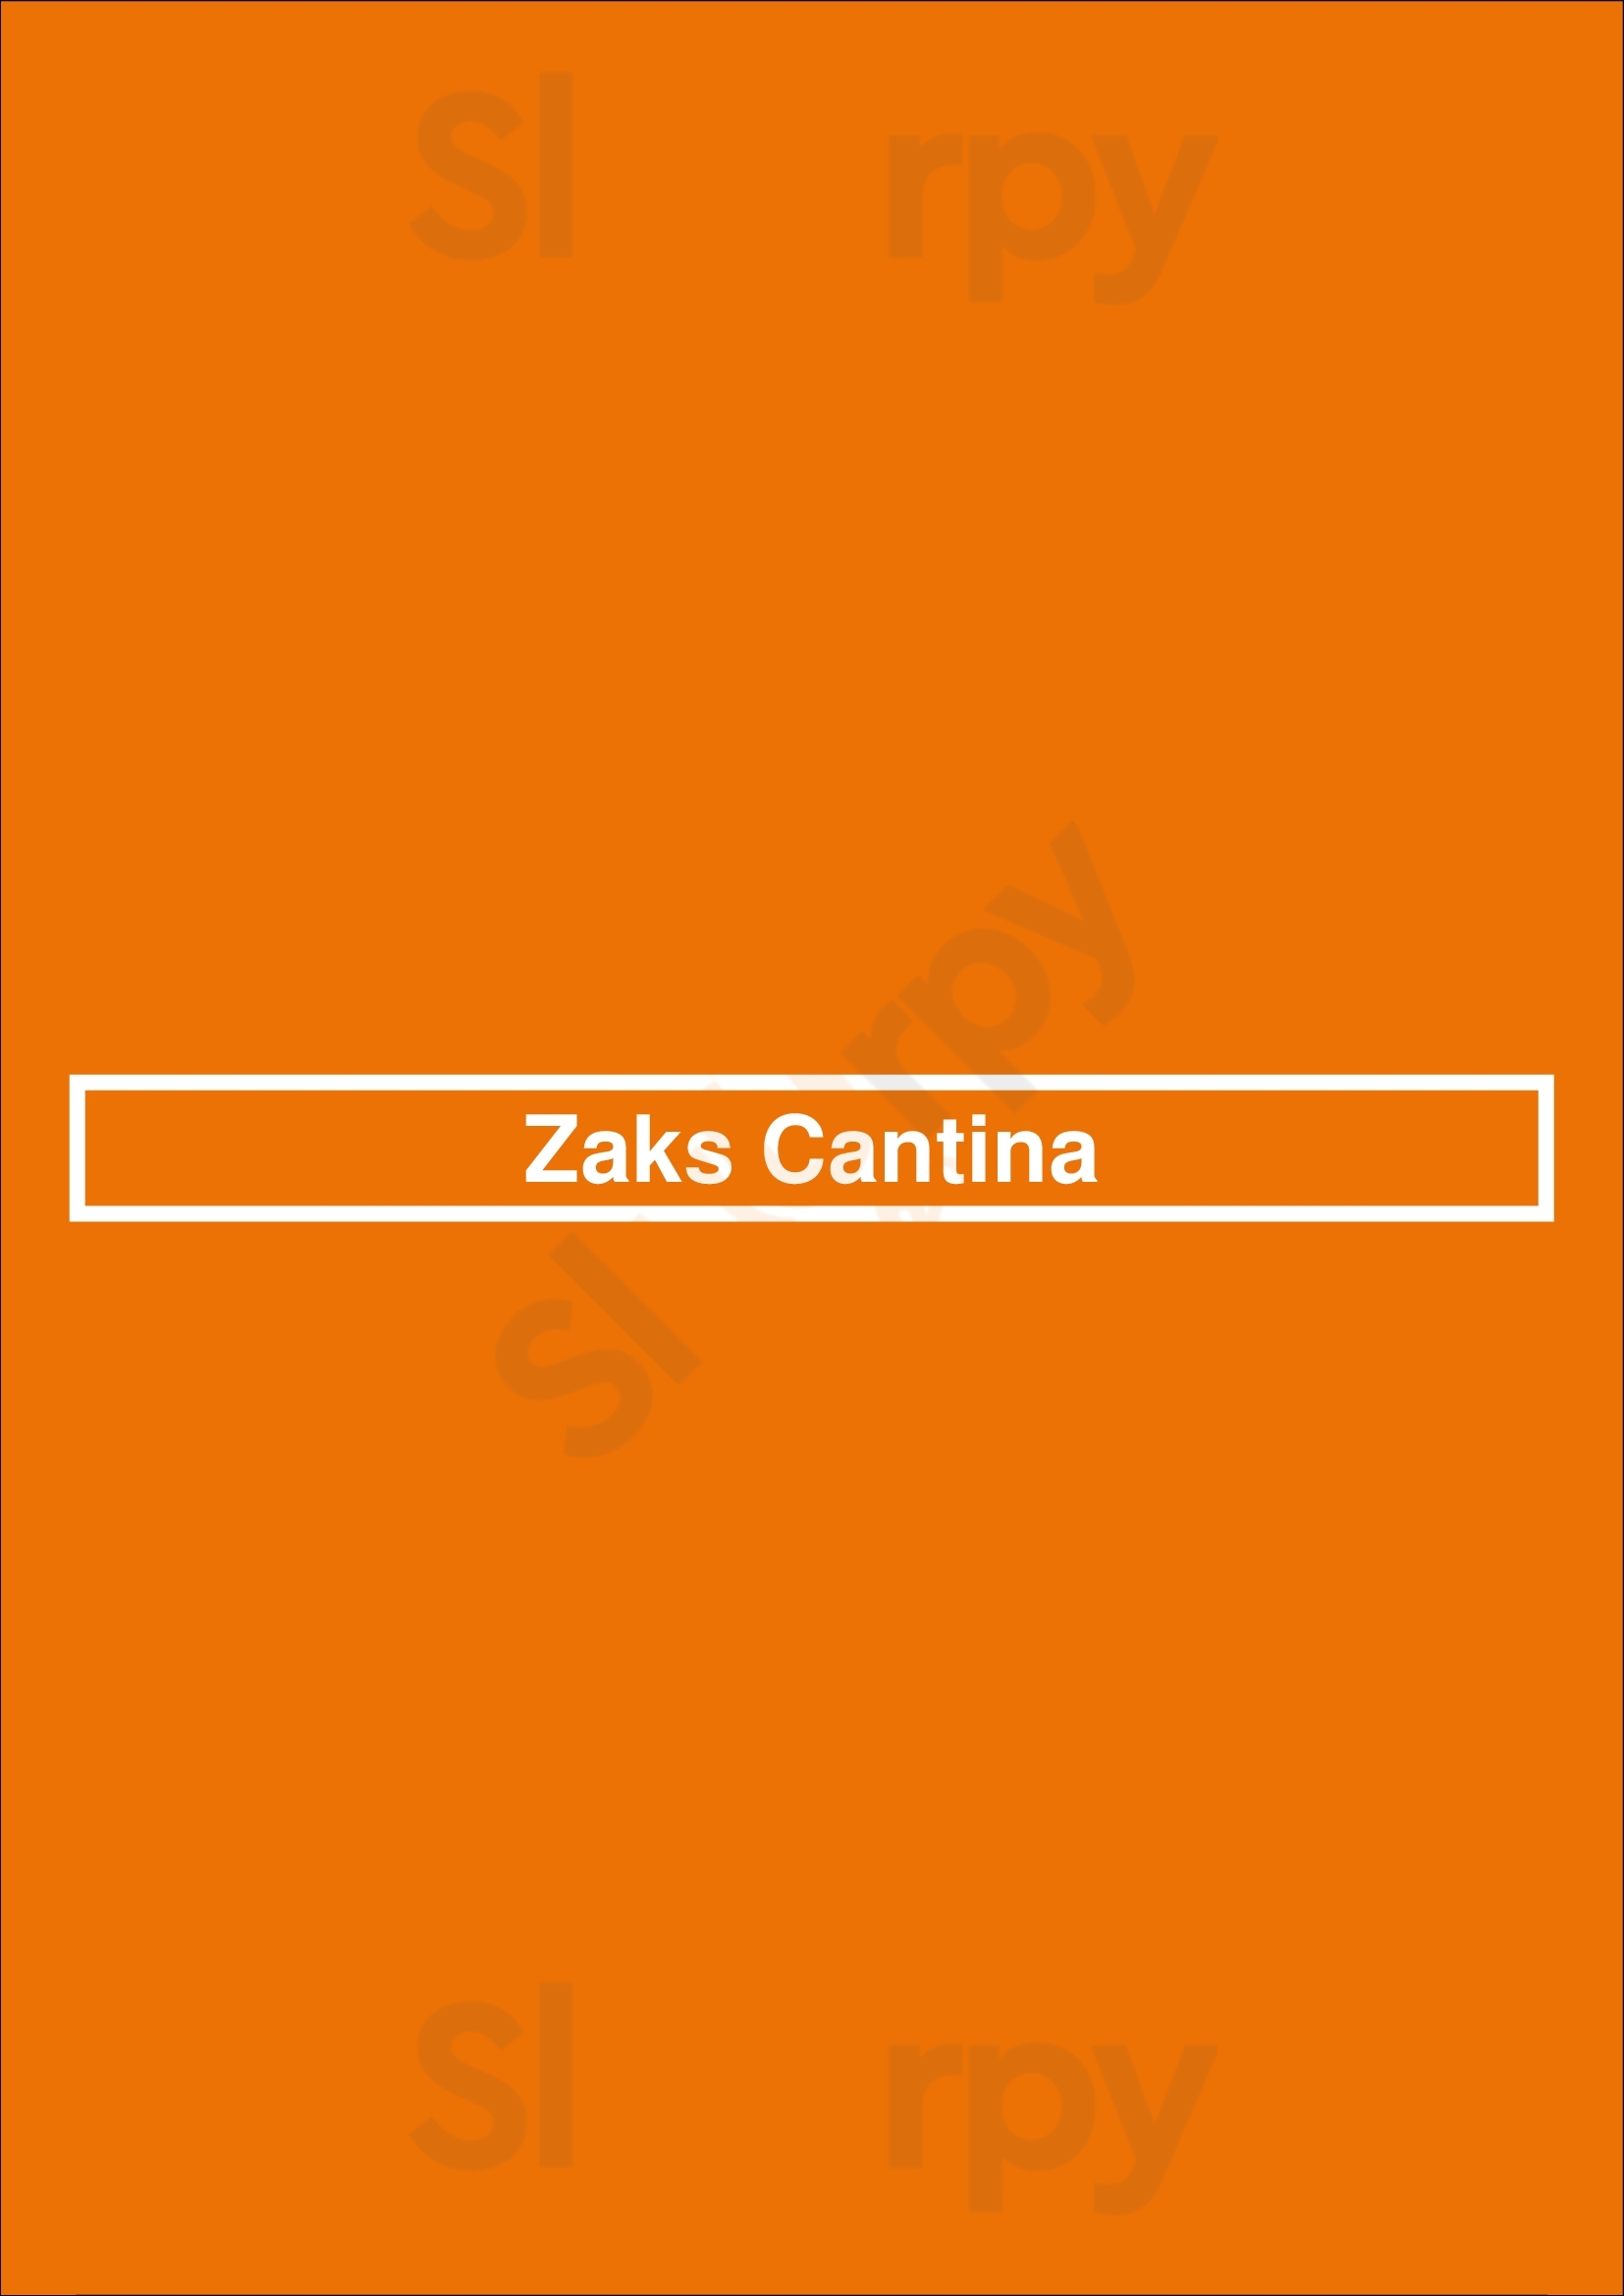 Zaks Cantina Ottawa Menu - 1